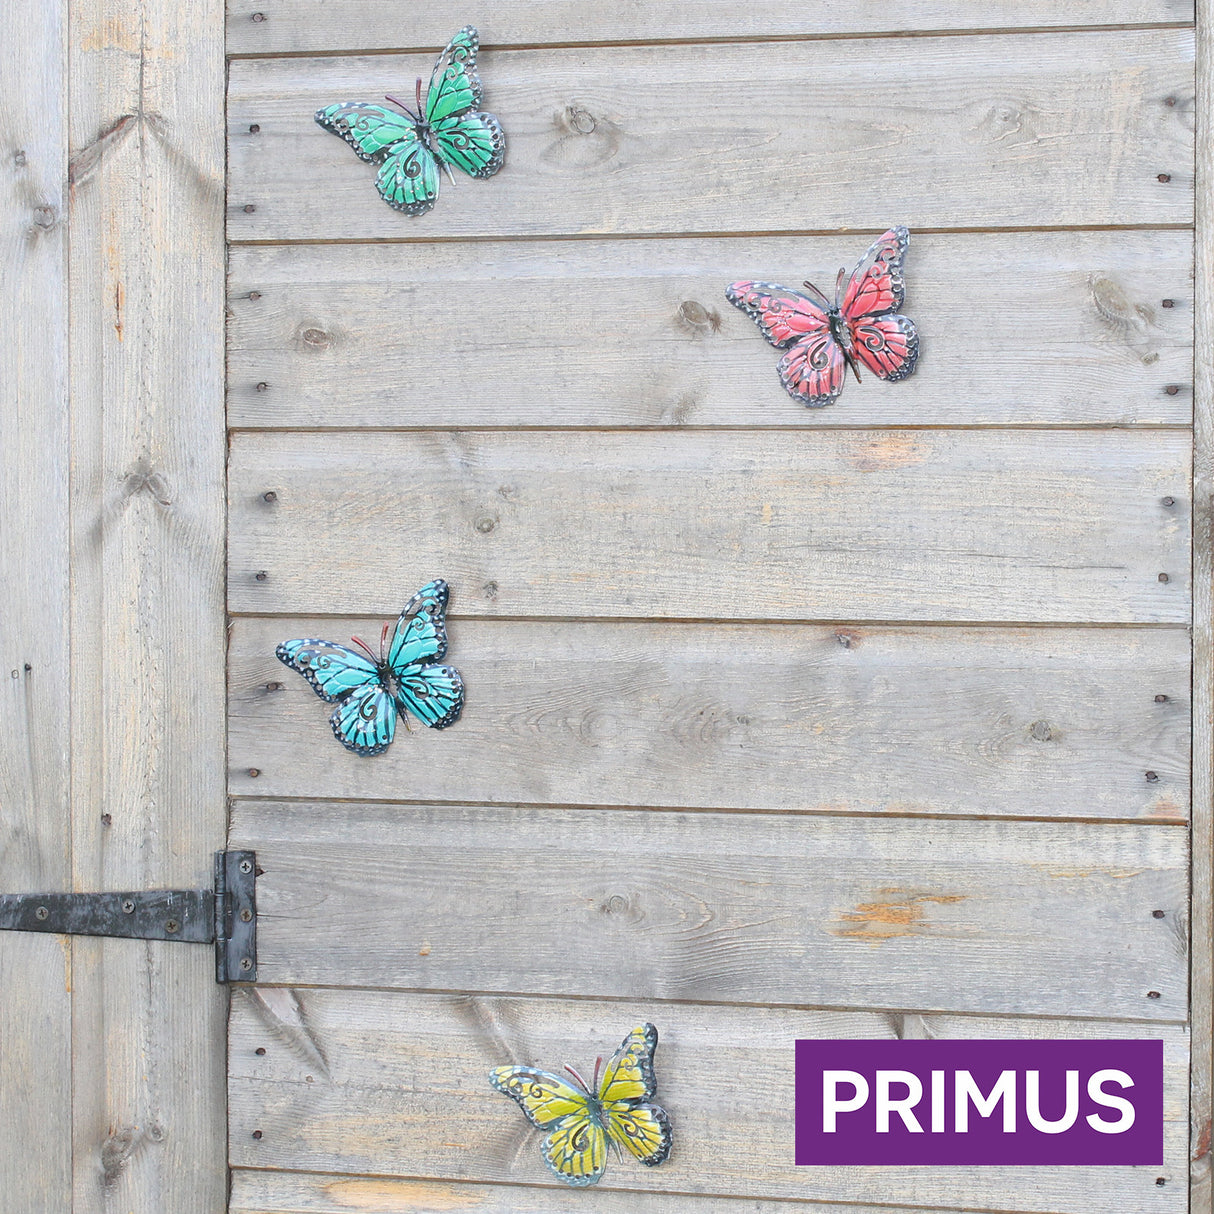 Set of 12 Multicoloured Metal Butterflies Garden Wall Ornaments